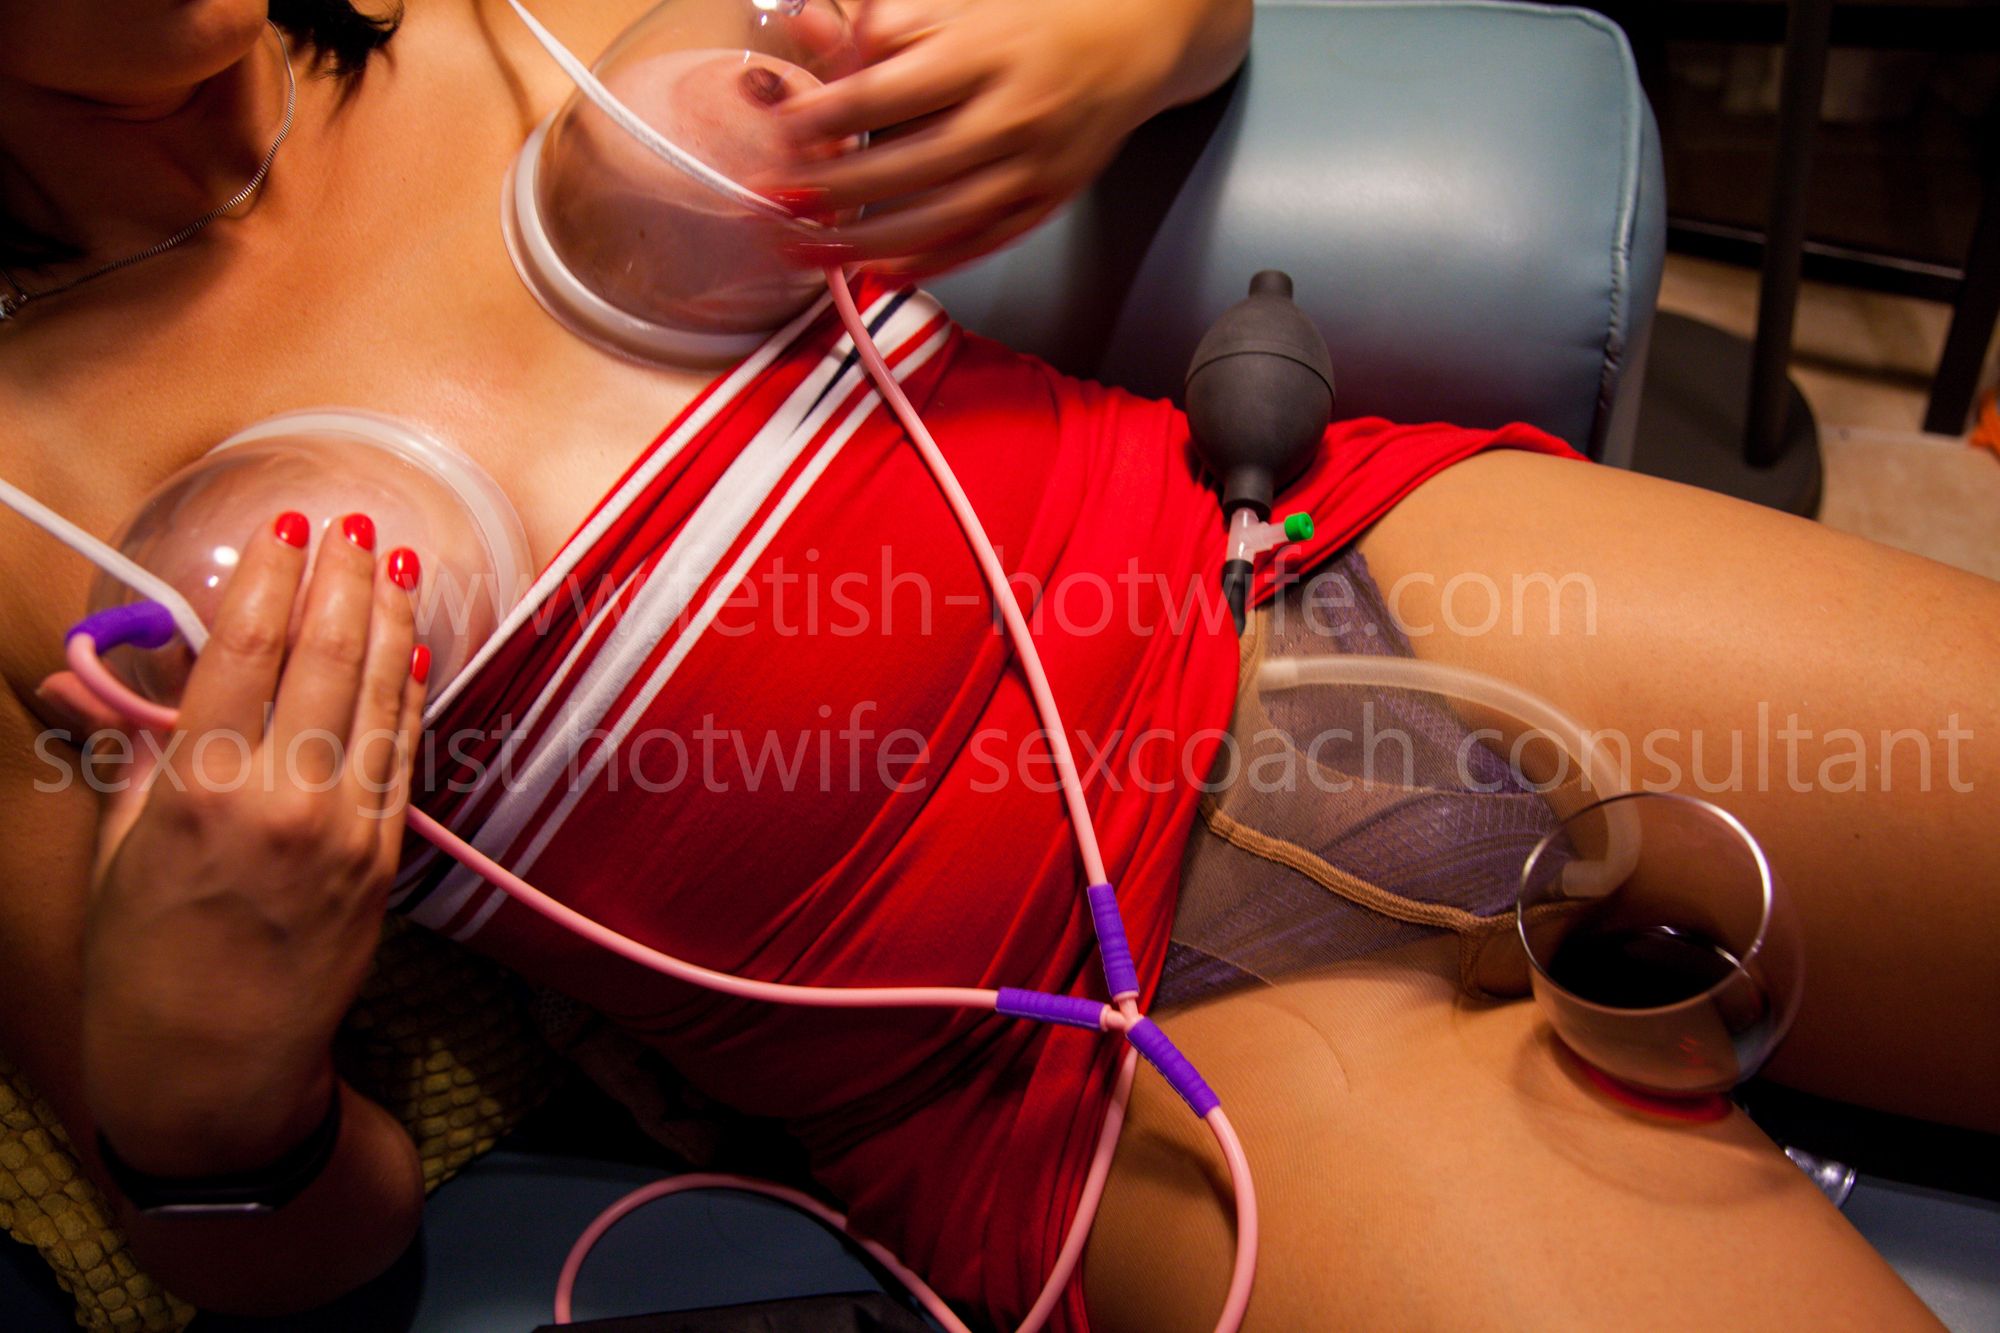 breast enlargement (augmentation) vacuum therapy